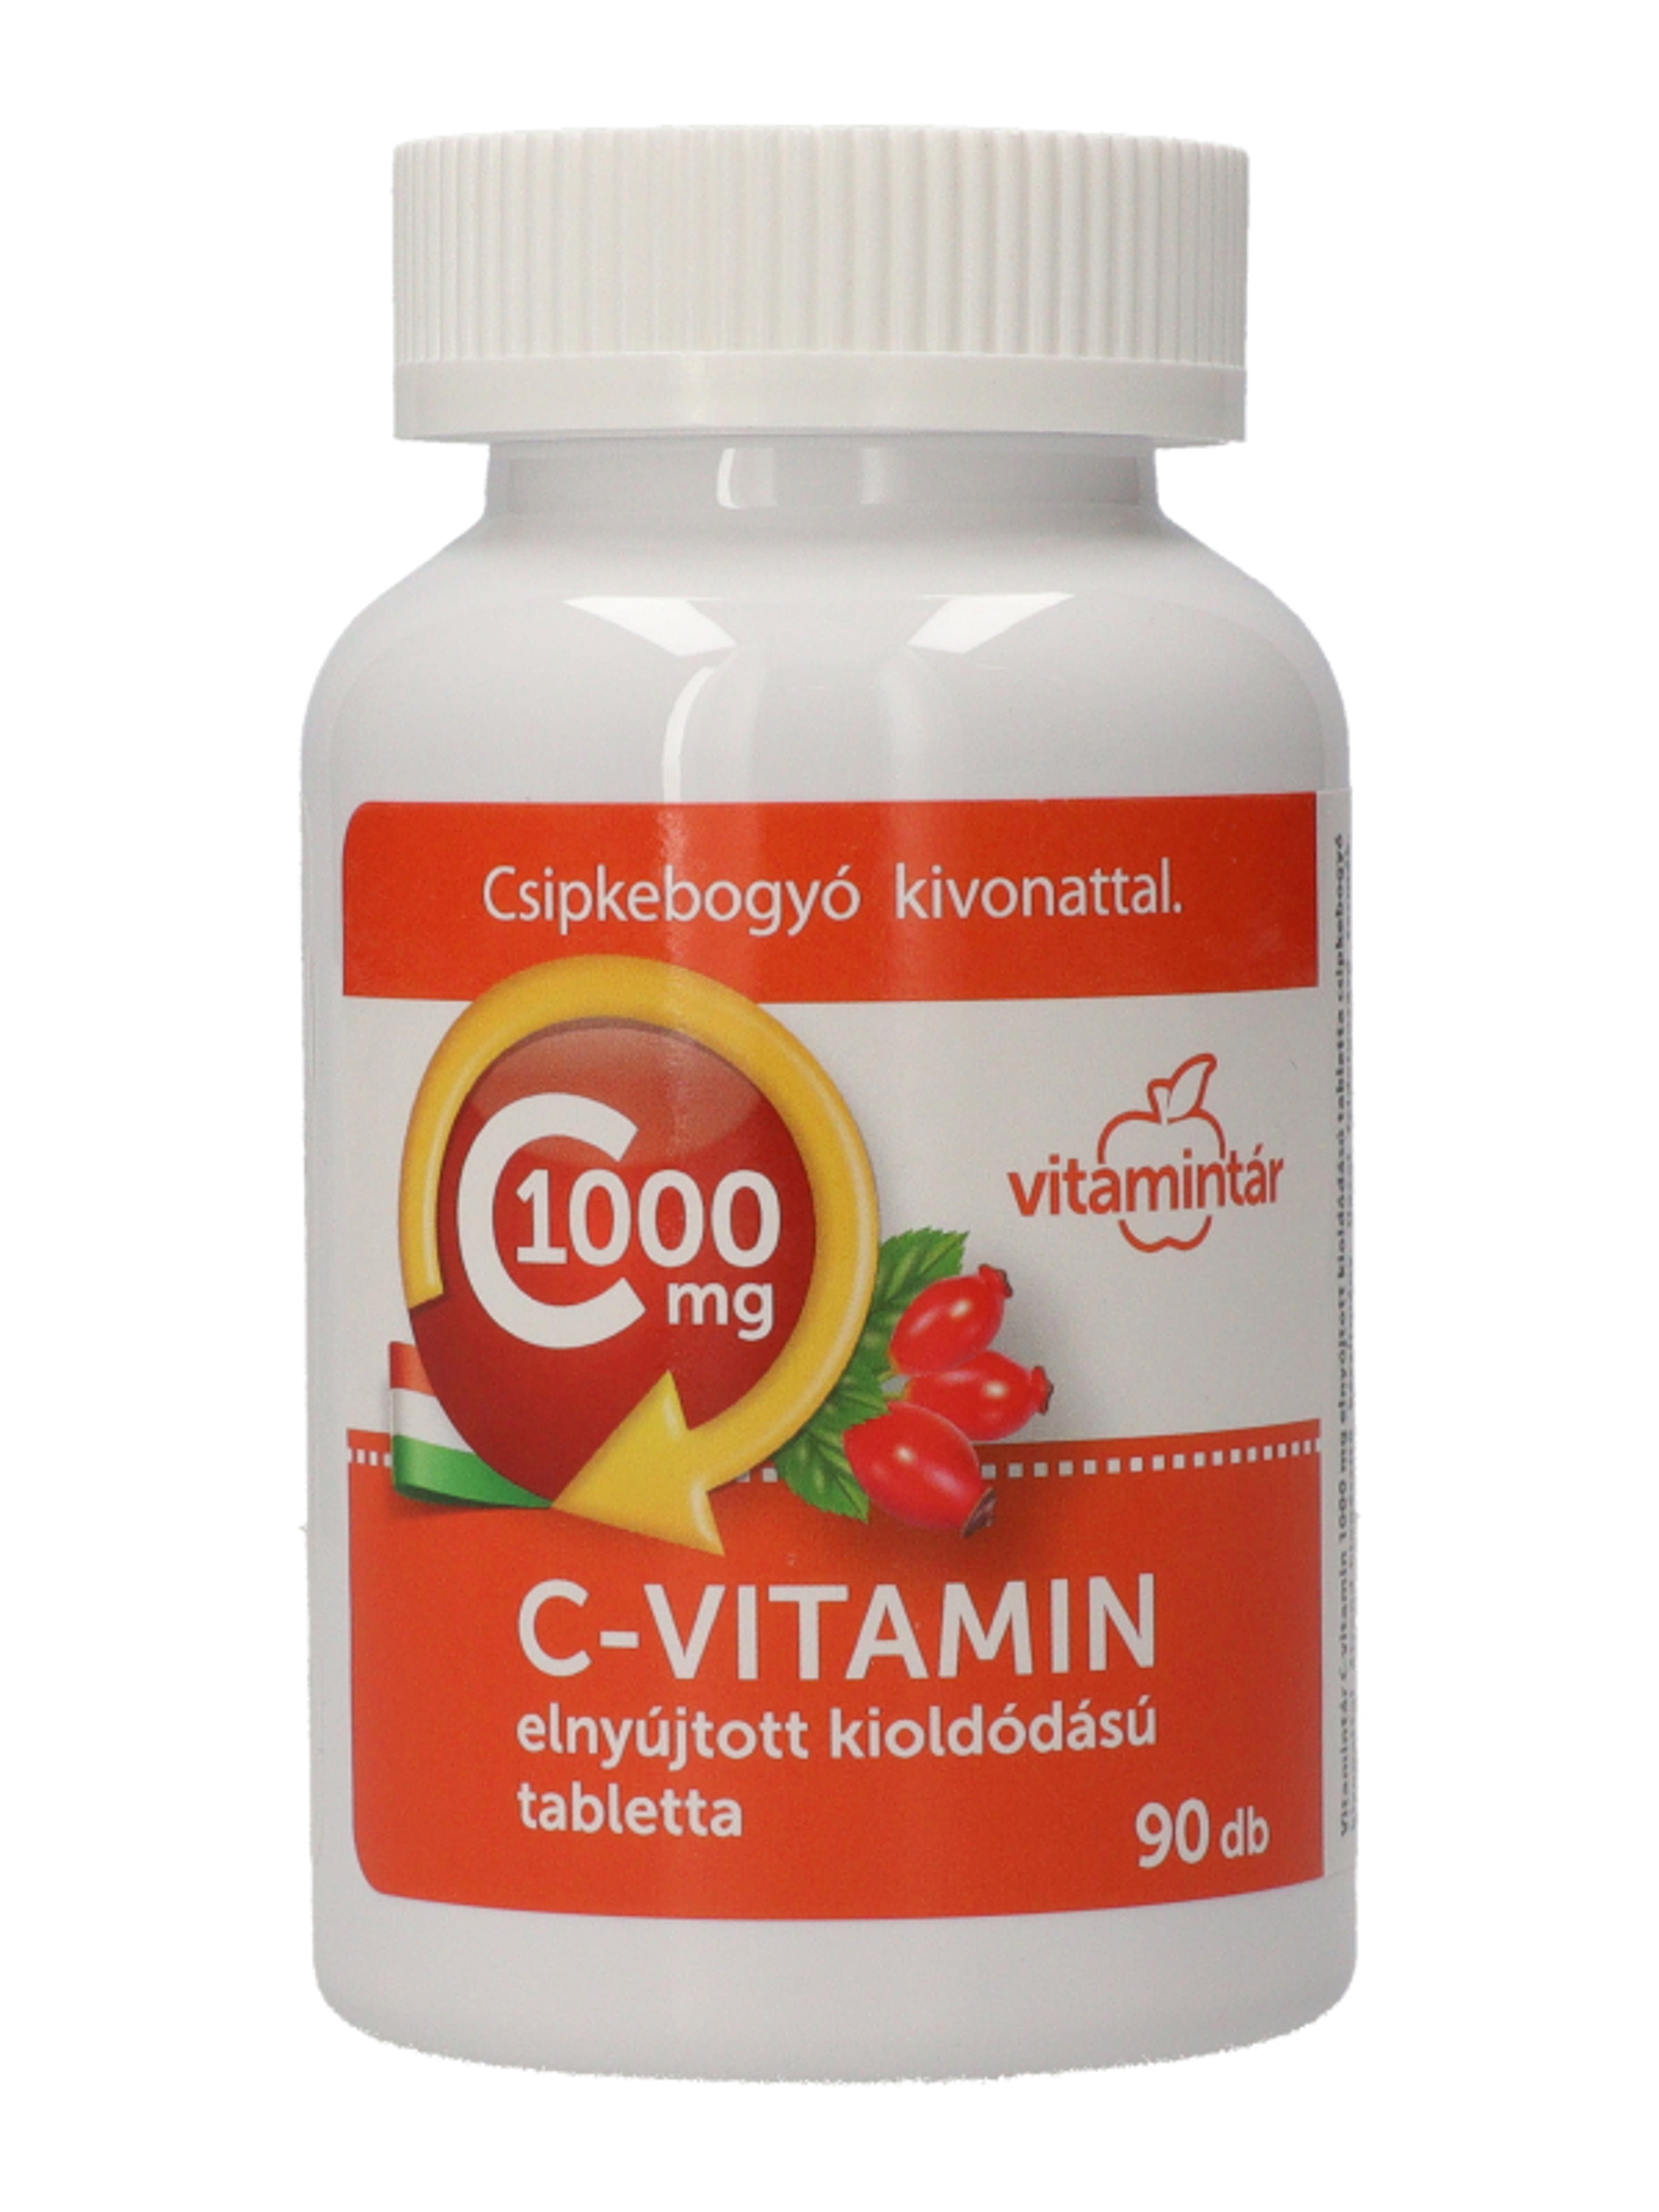 Vitamintár C-Vitamin Csipkebogyó Kivonattal 1000mg Tabletta - 90 db-2